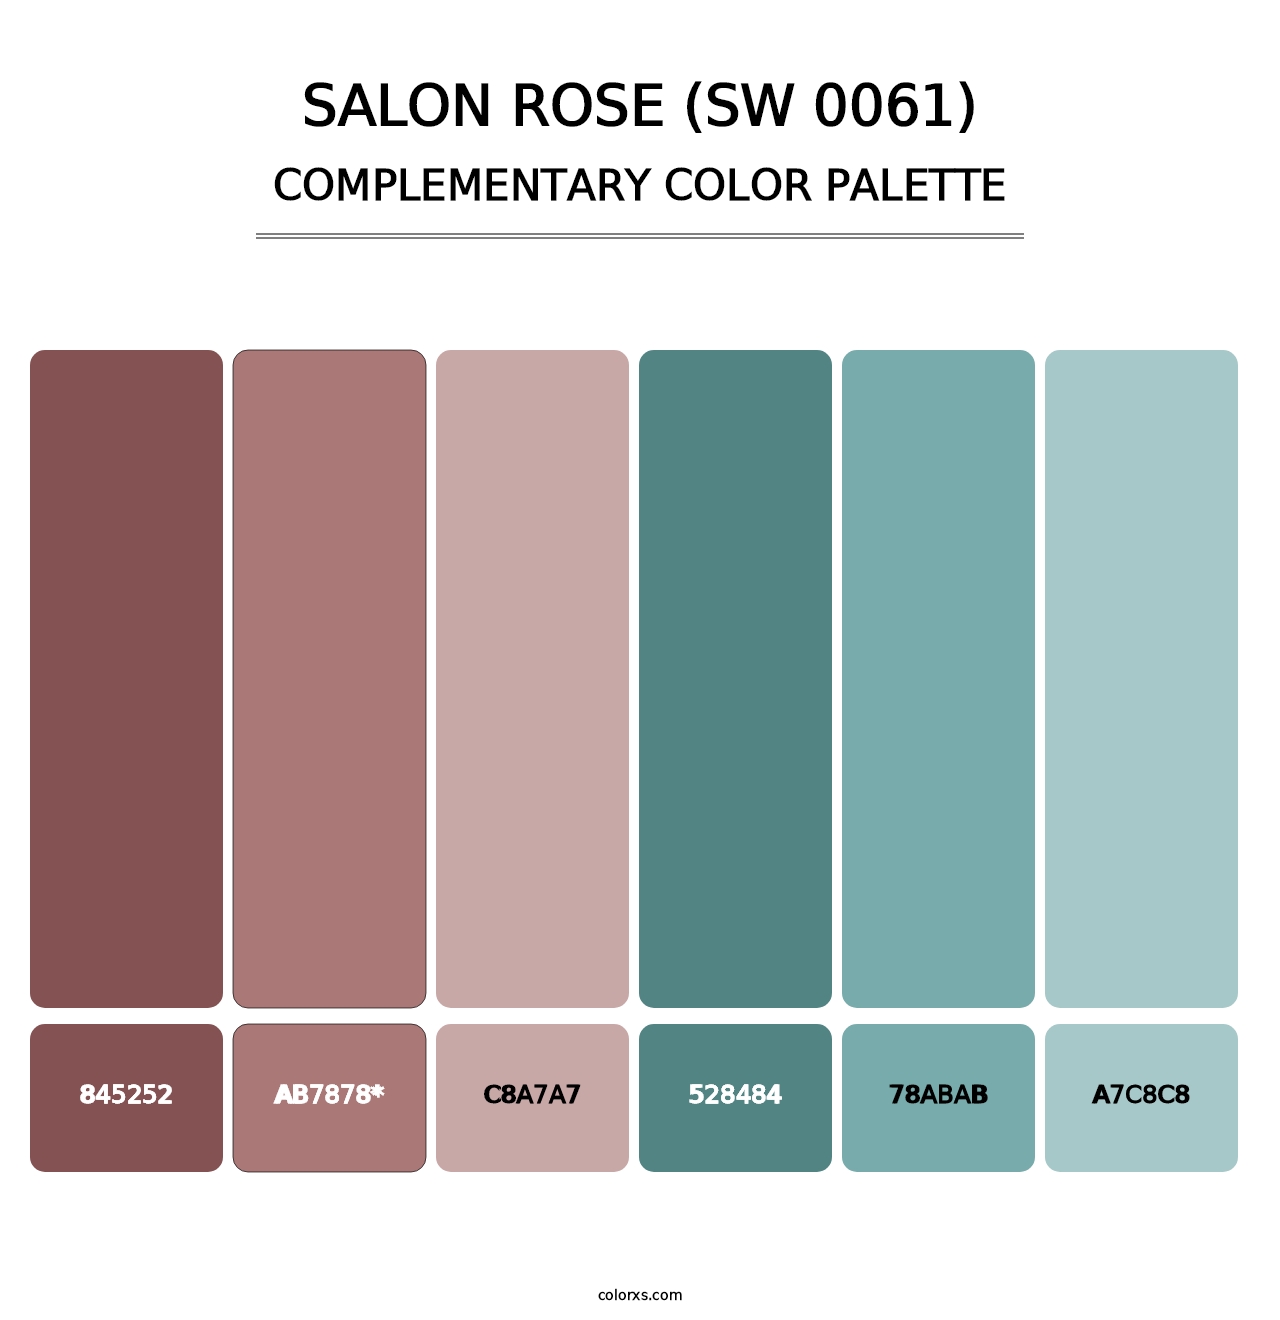 Salon Rose (SW 0061) - Complementary Color Palette